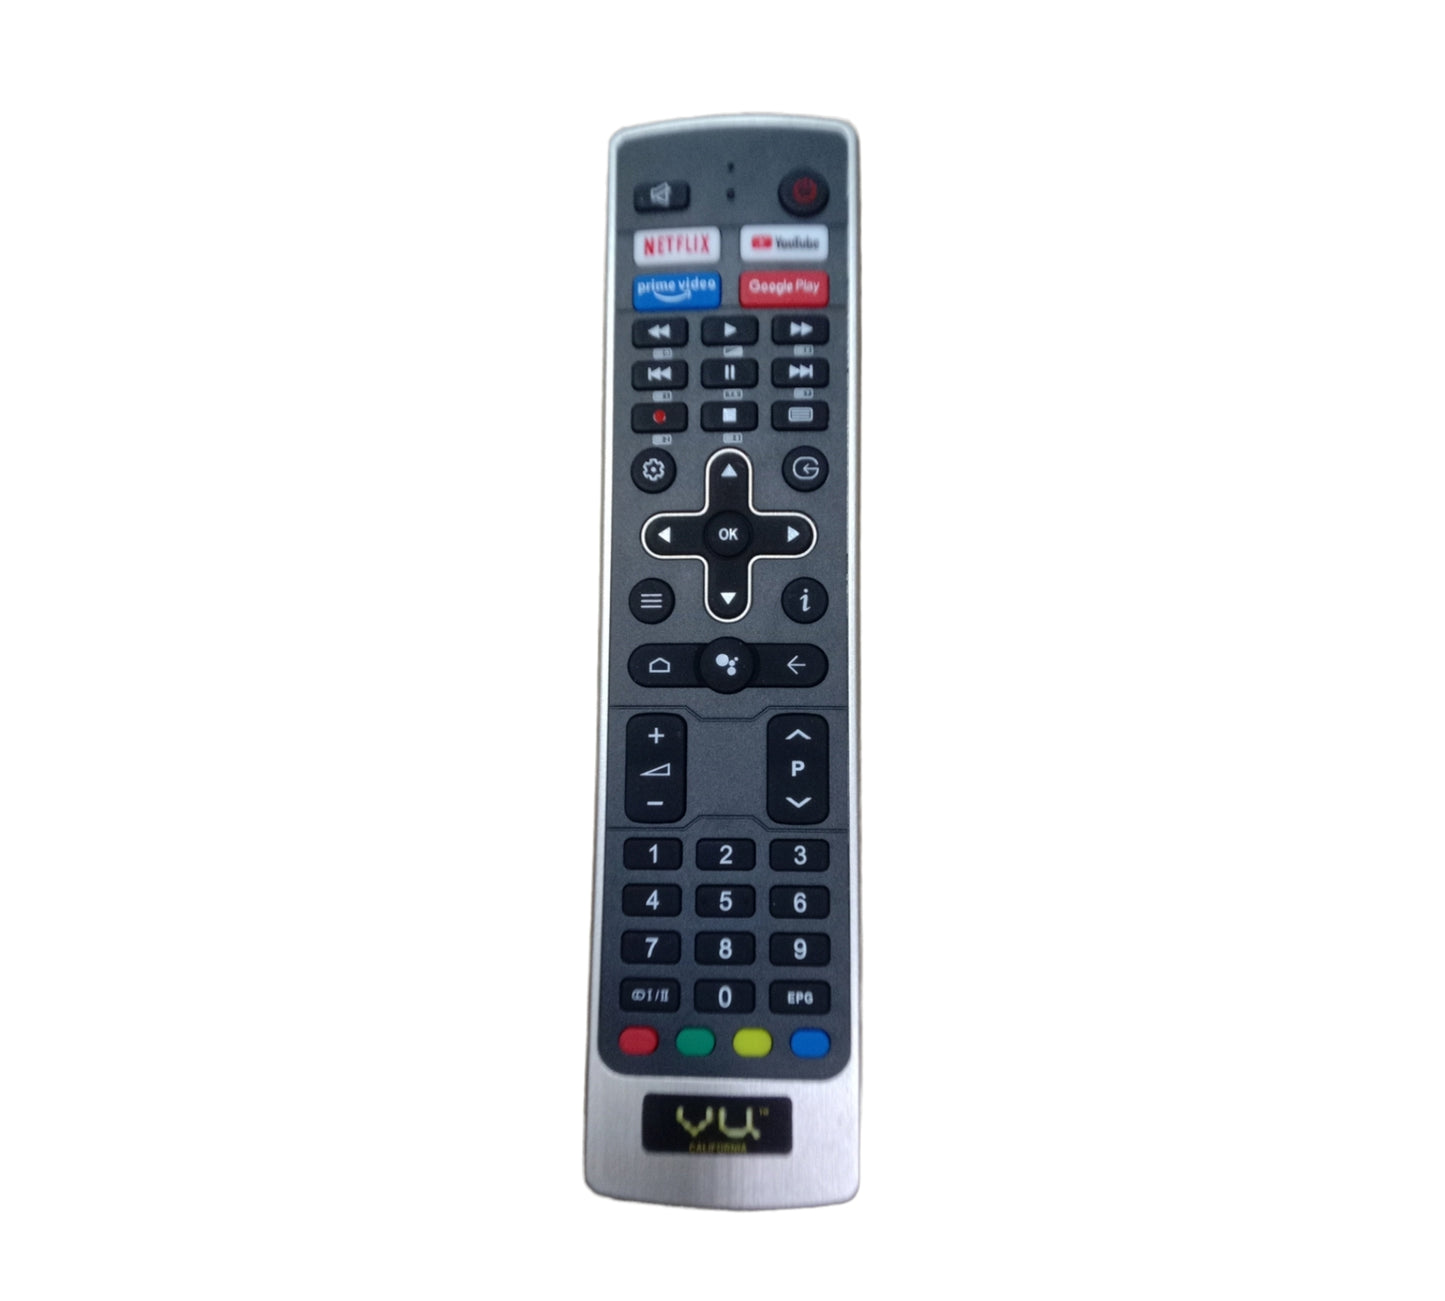 VU Smart TV remote control Netflix,Youtube,primevideo,google play